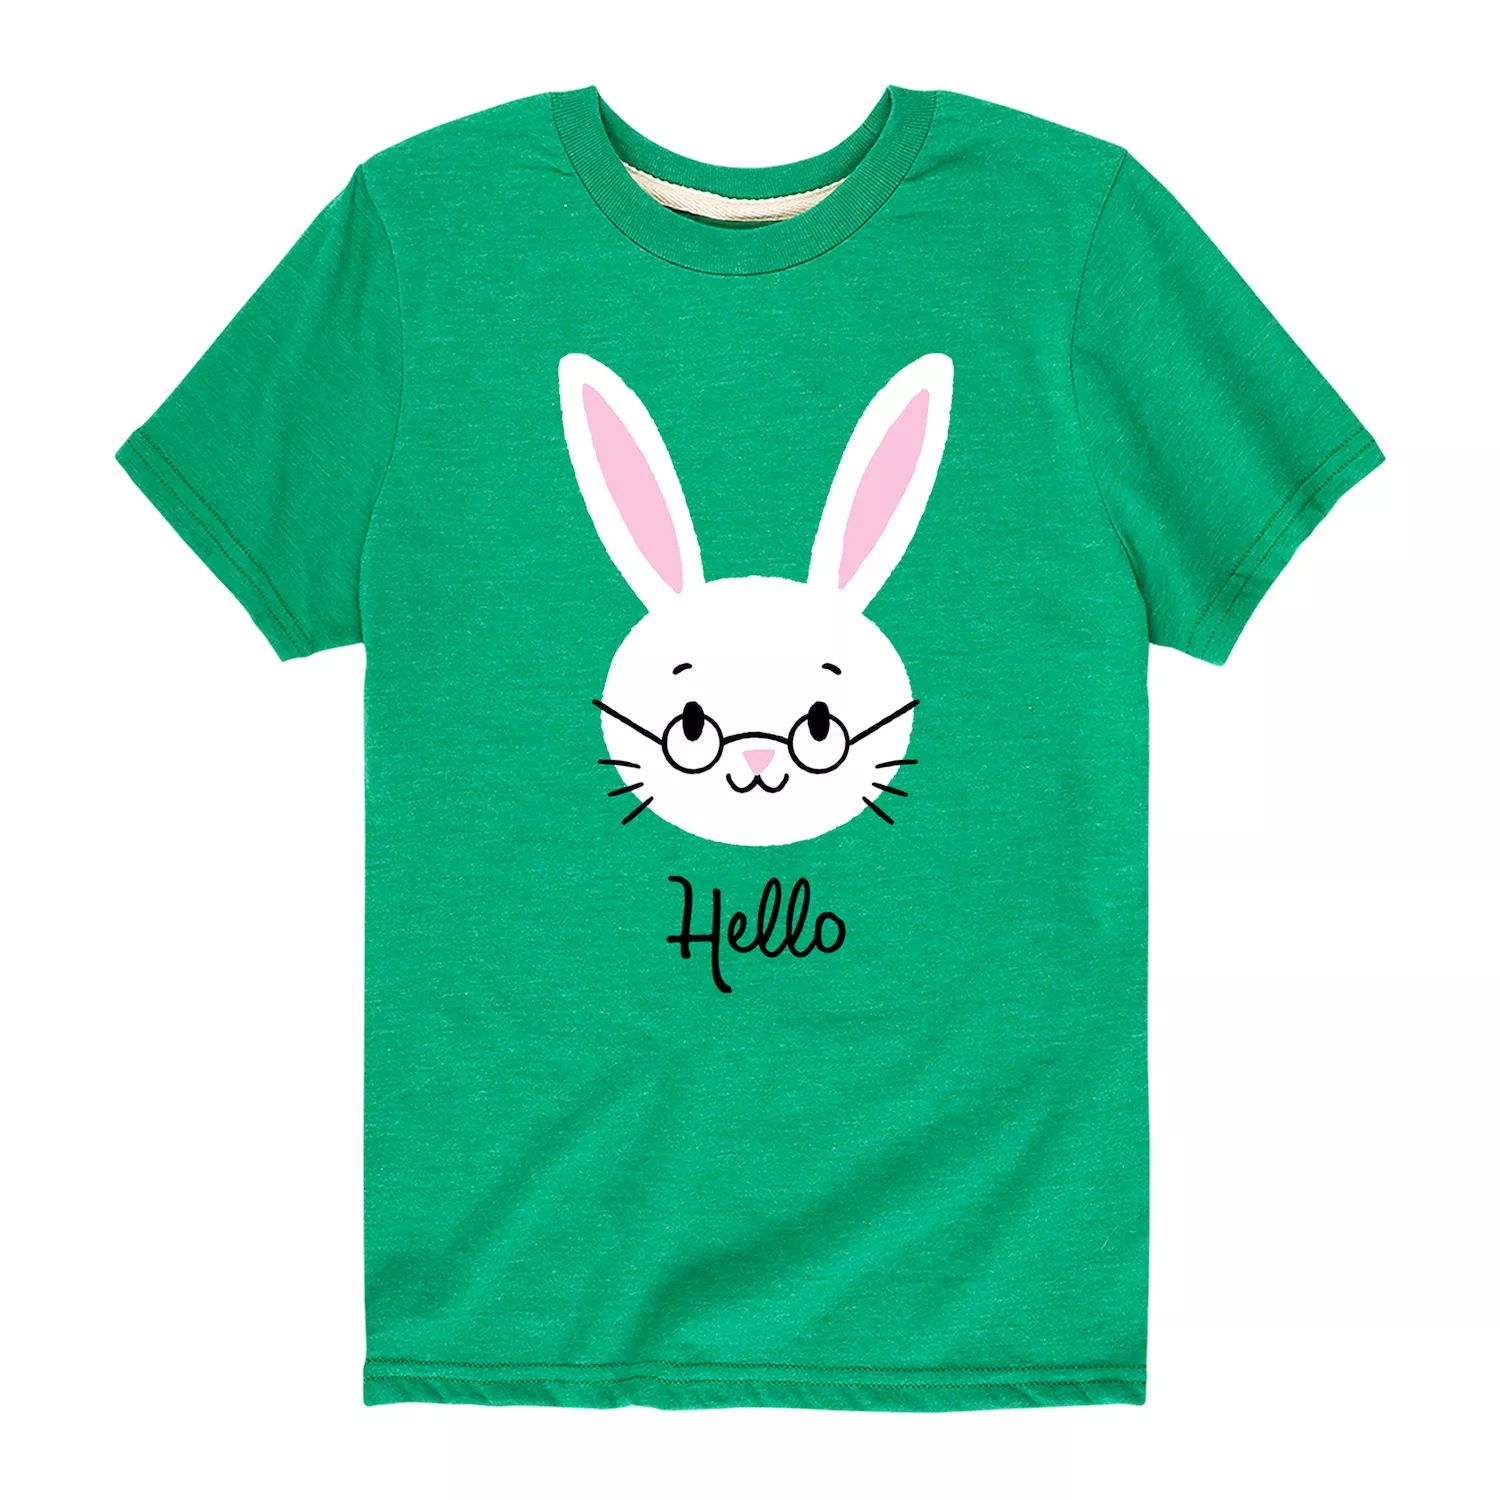 Футболка с рисунком «Hello Пасхальный кролик» для мальчиков 8–20 лет Licensed Character футболка с рисунком пасхальный бант для мальчиков 8–20 лет chicka bow wow licensed character